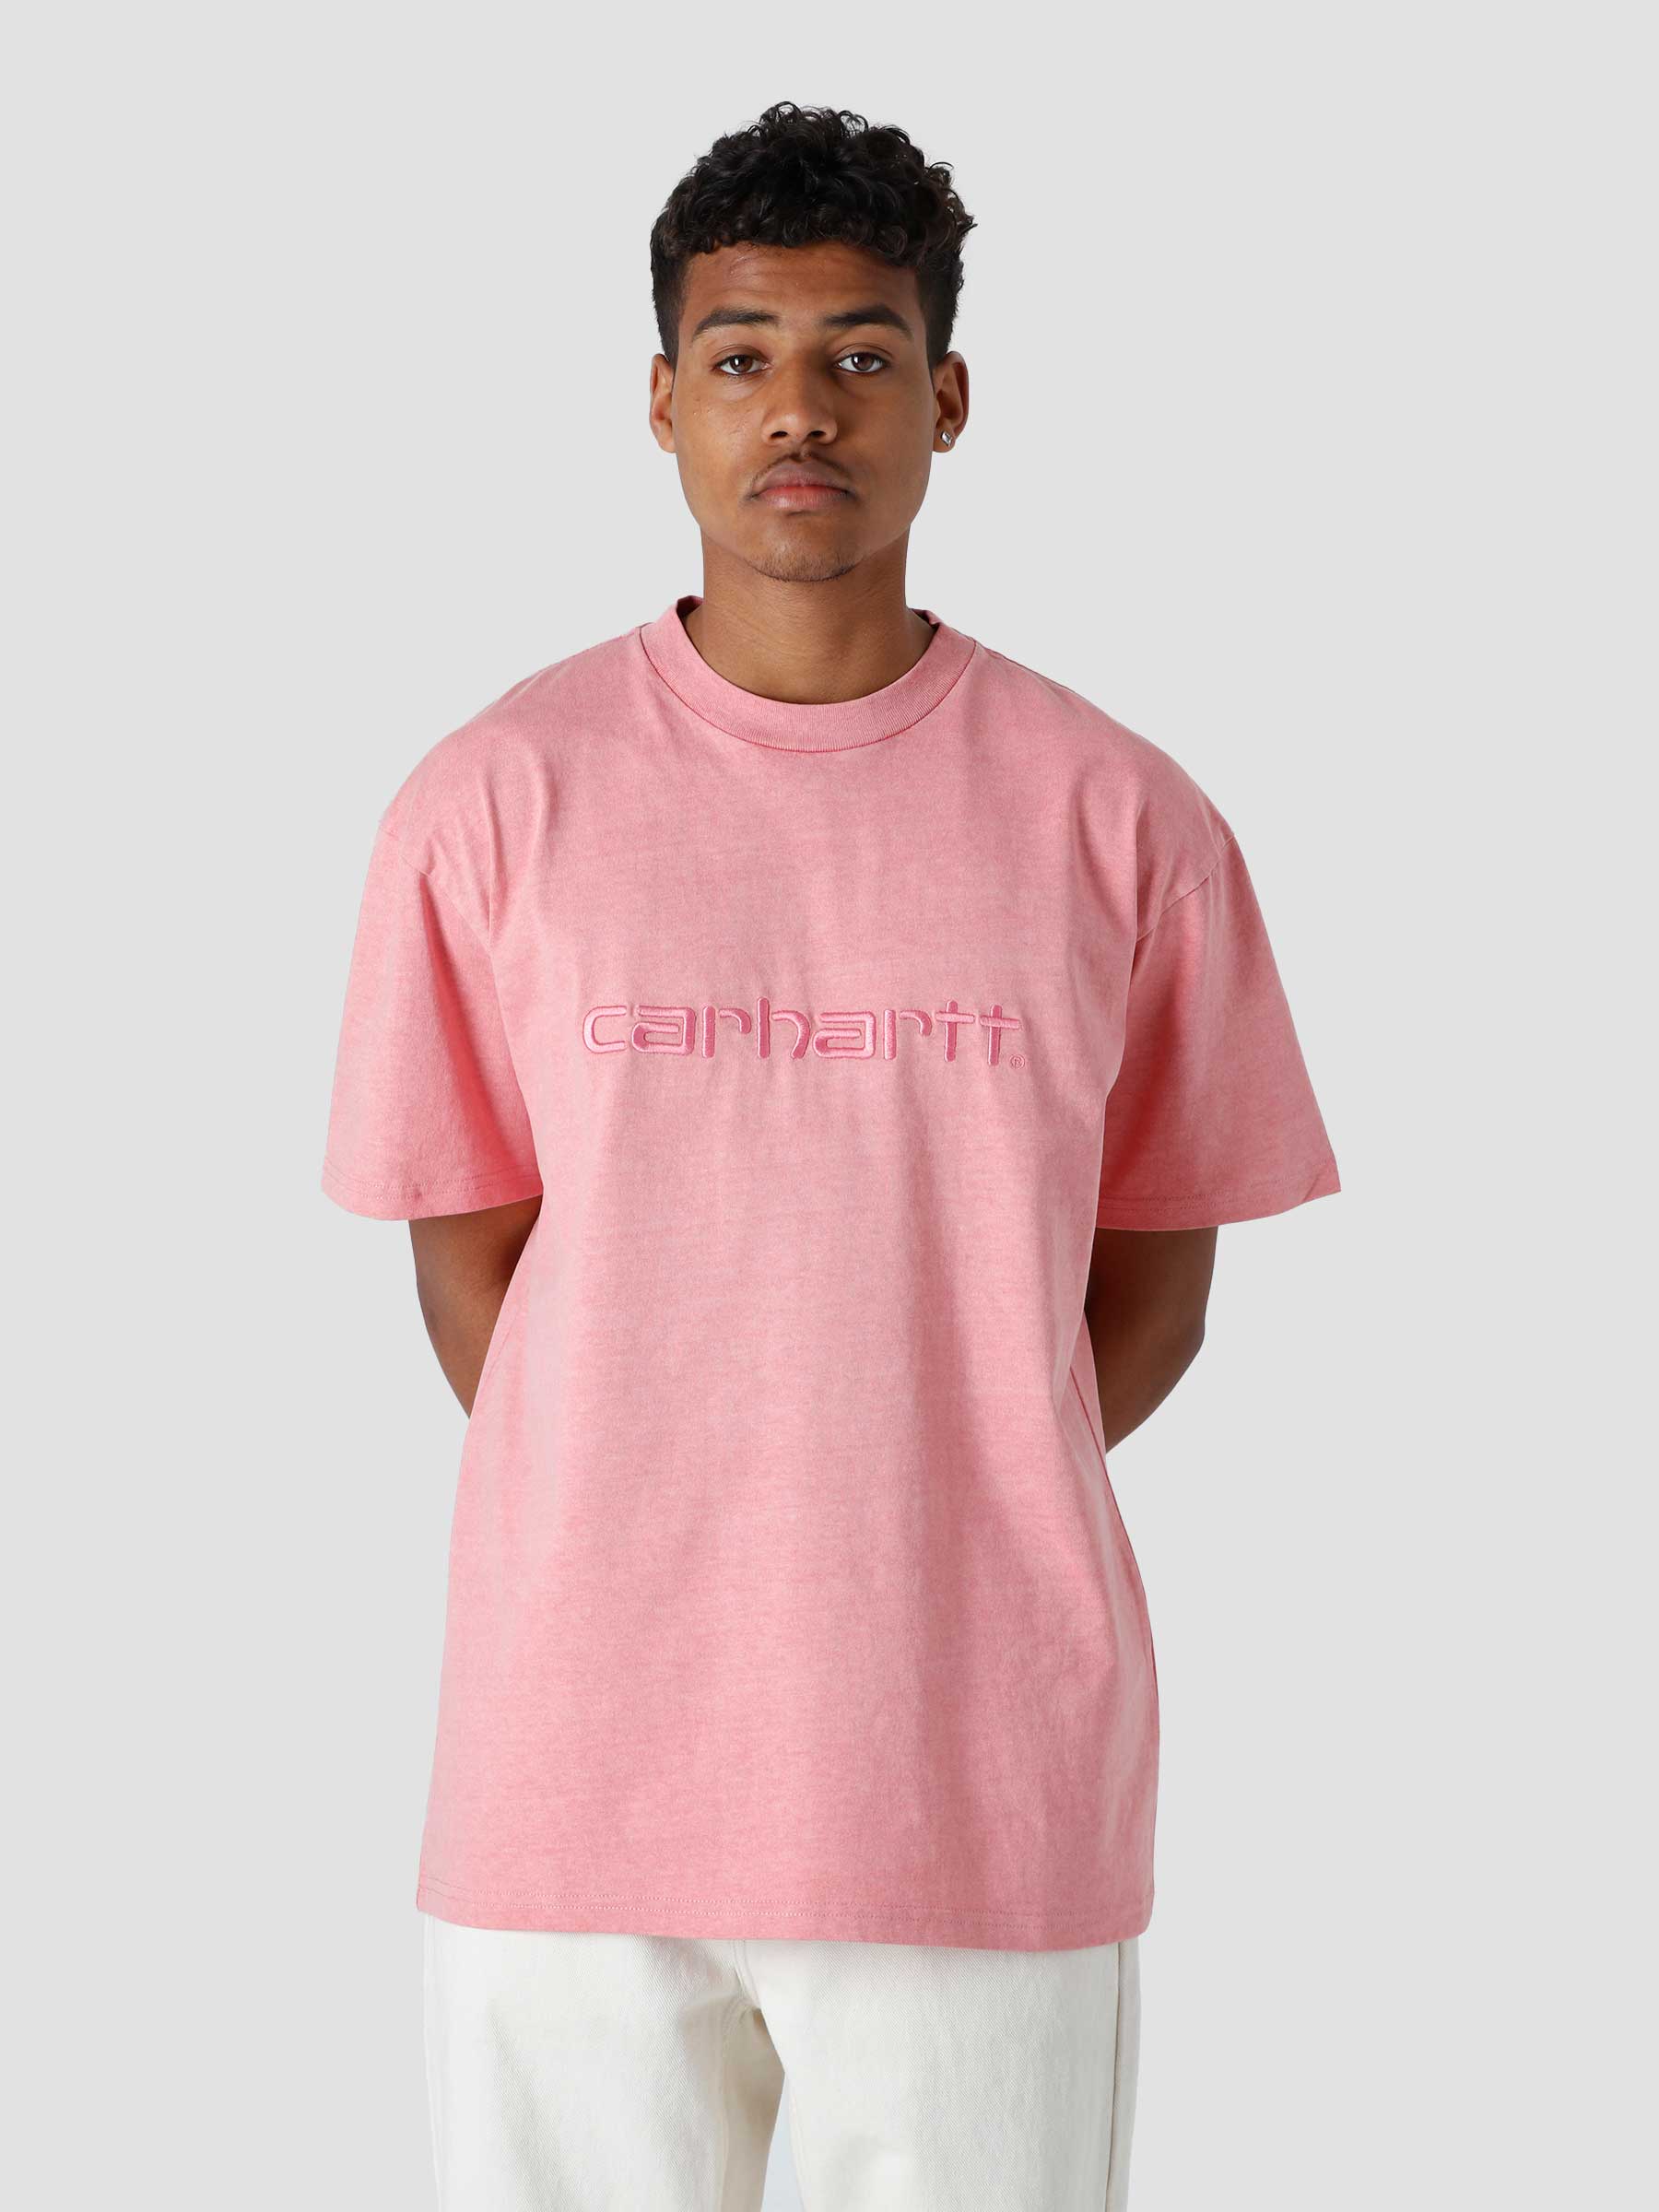 S/S Duster T-Shirt Rothko Pink I030110-0NXXX